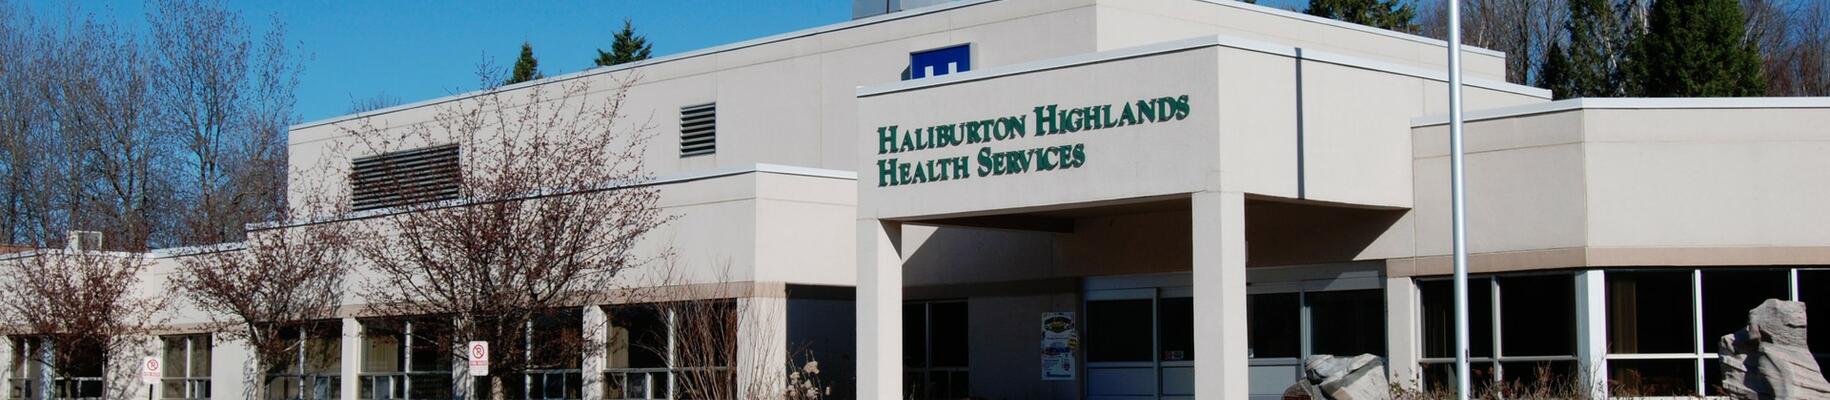 Haliburton Hospital